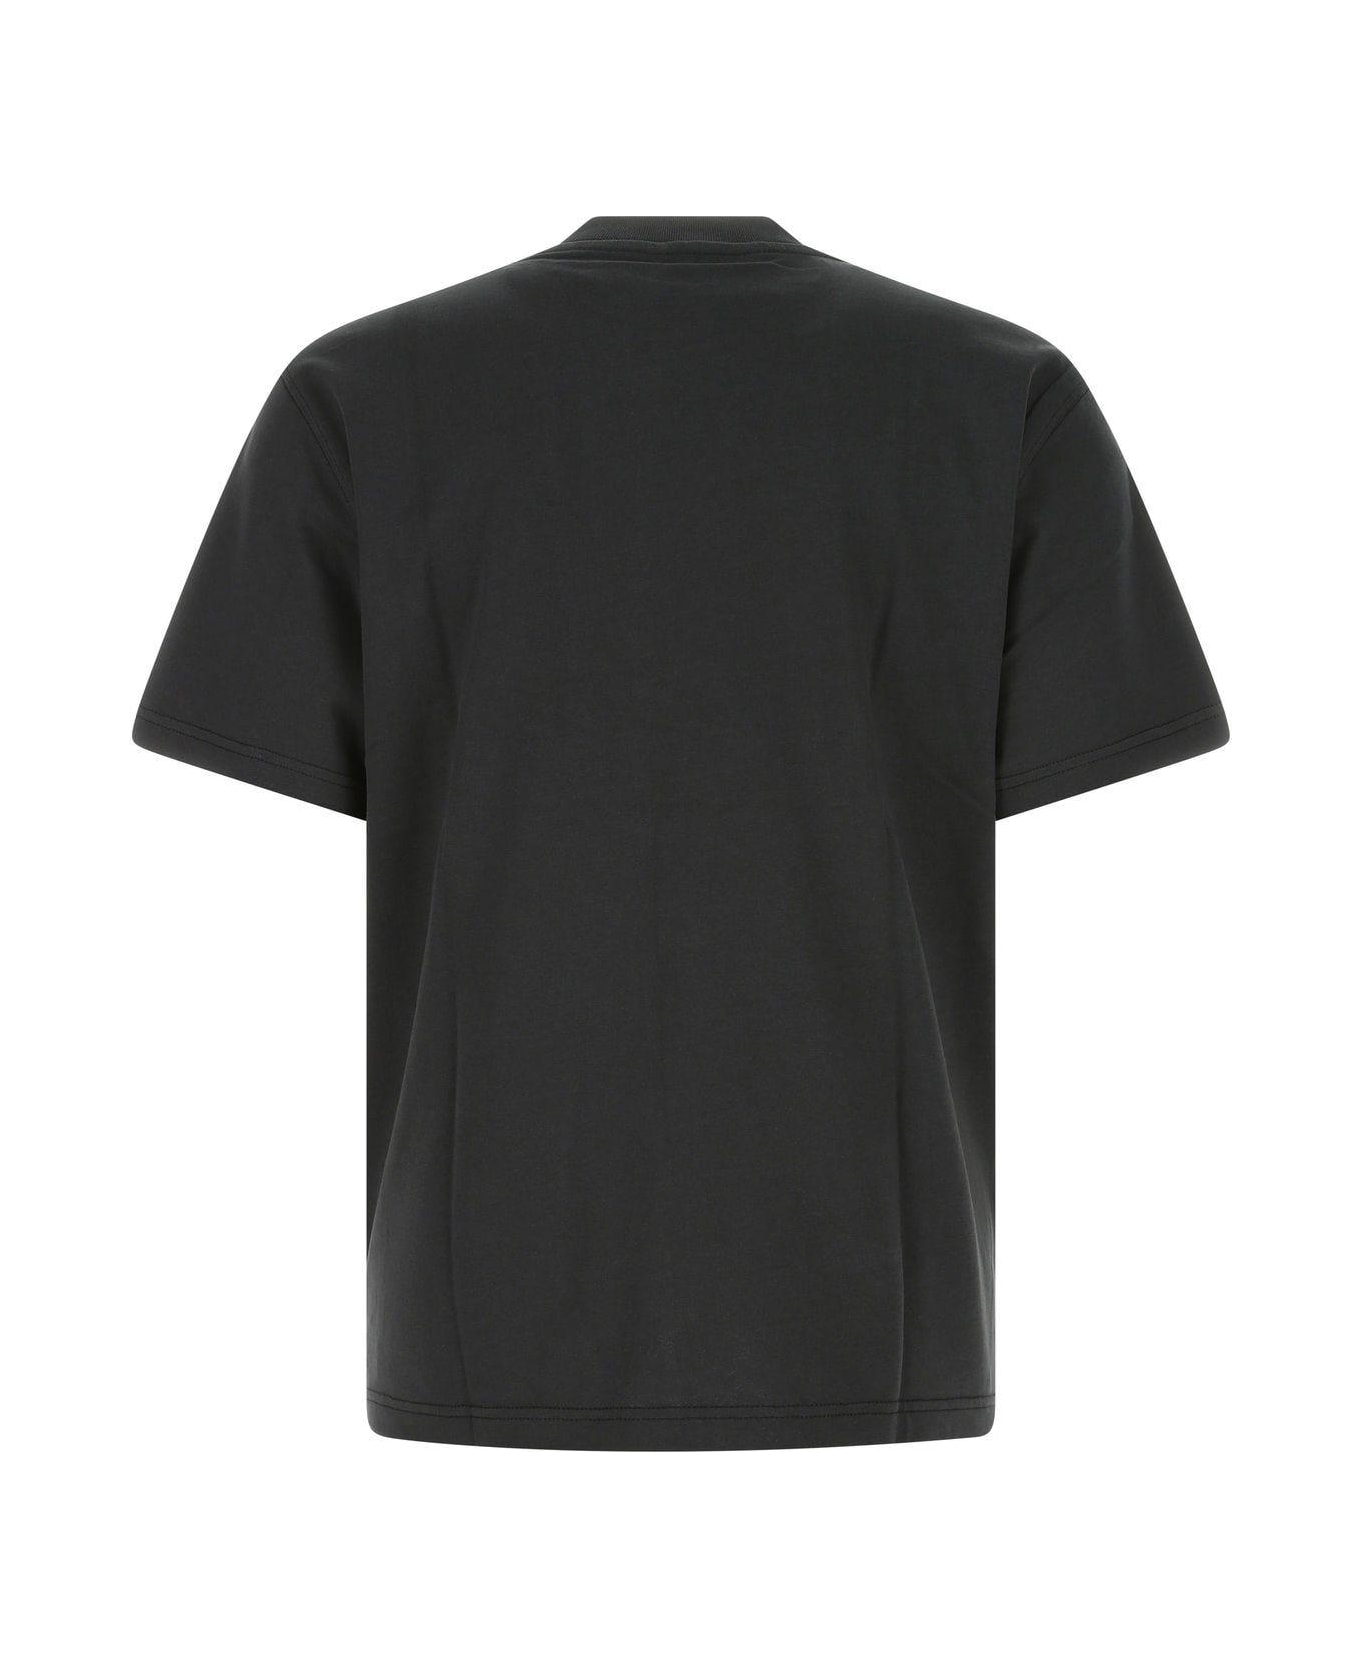 Dickies Black Cotton T-shirt - Nero